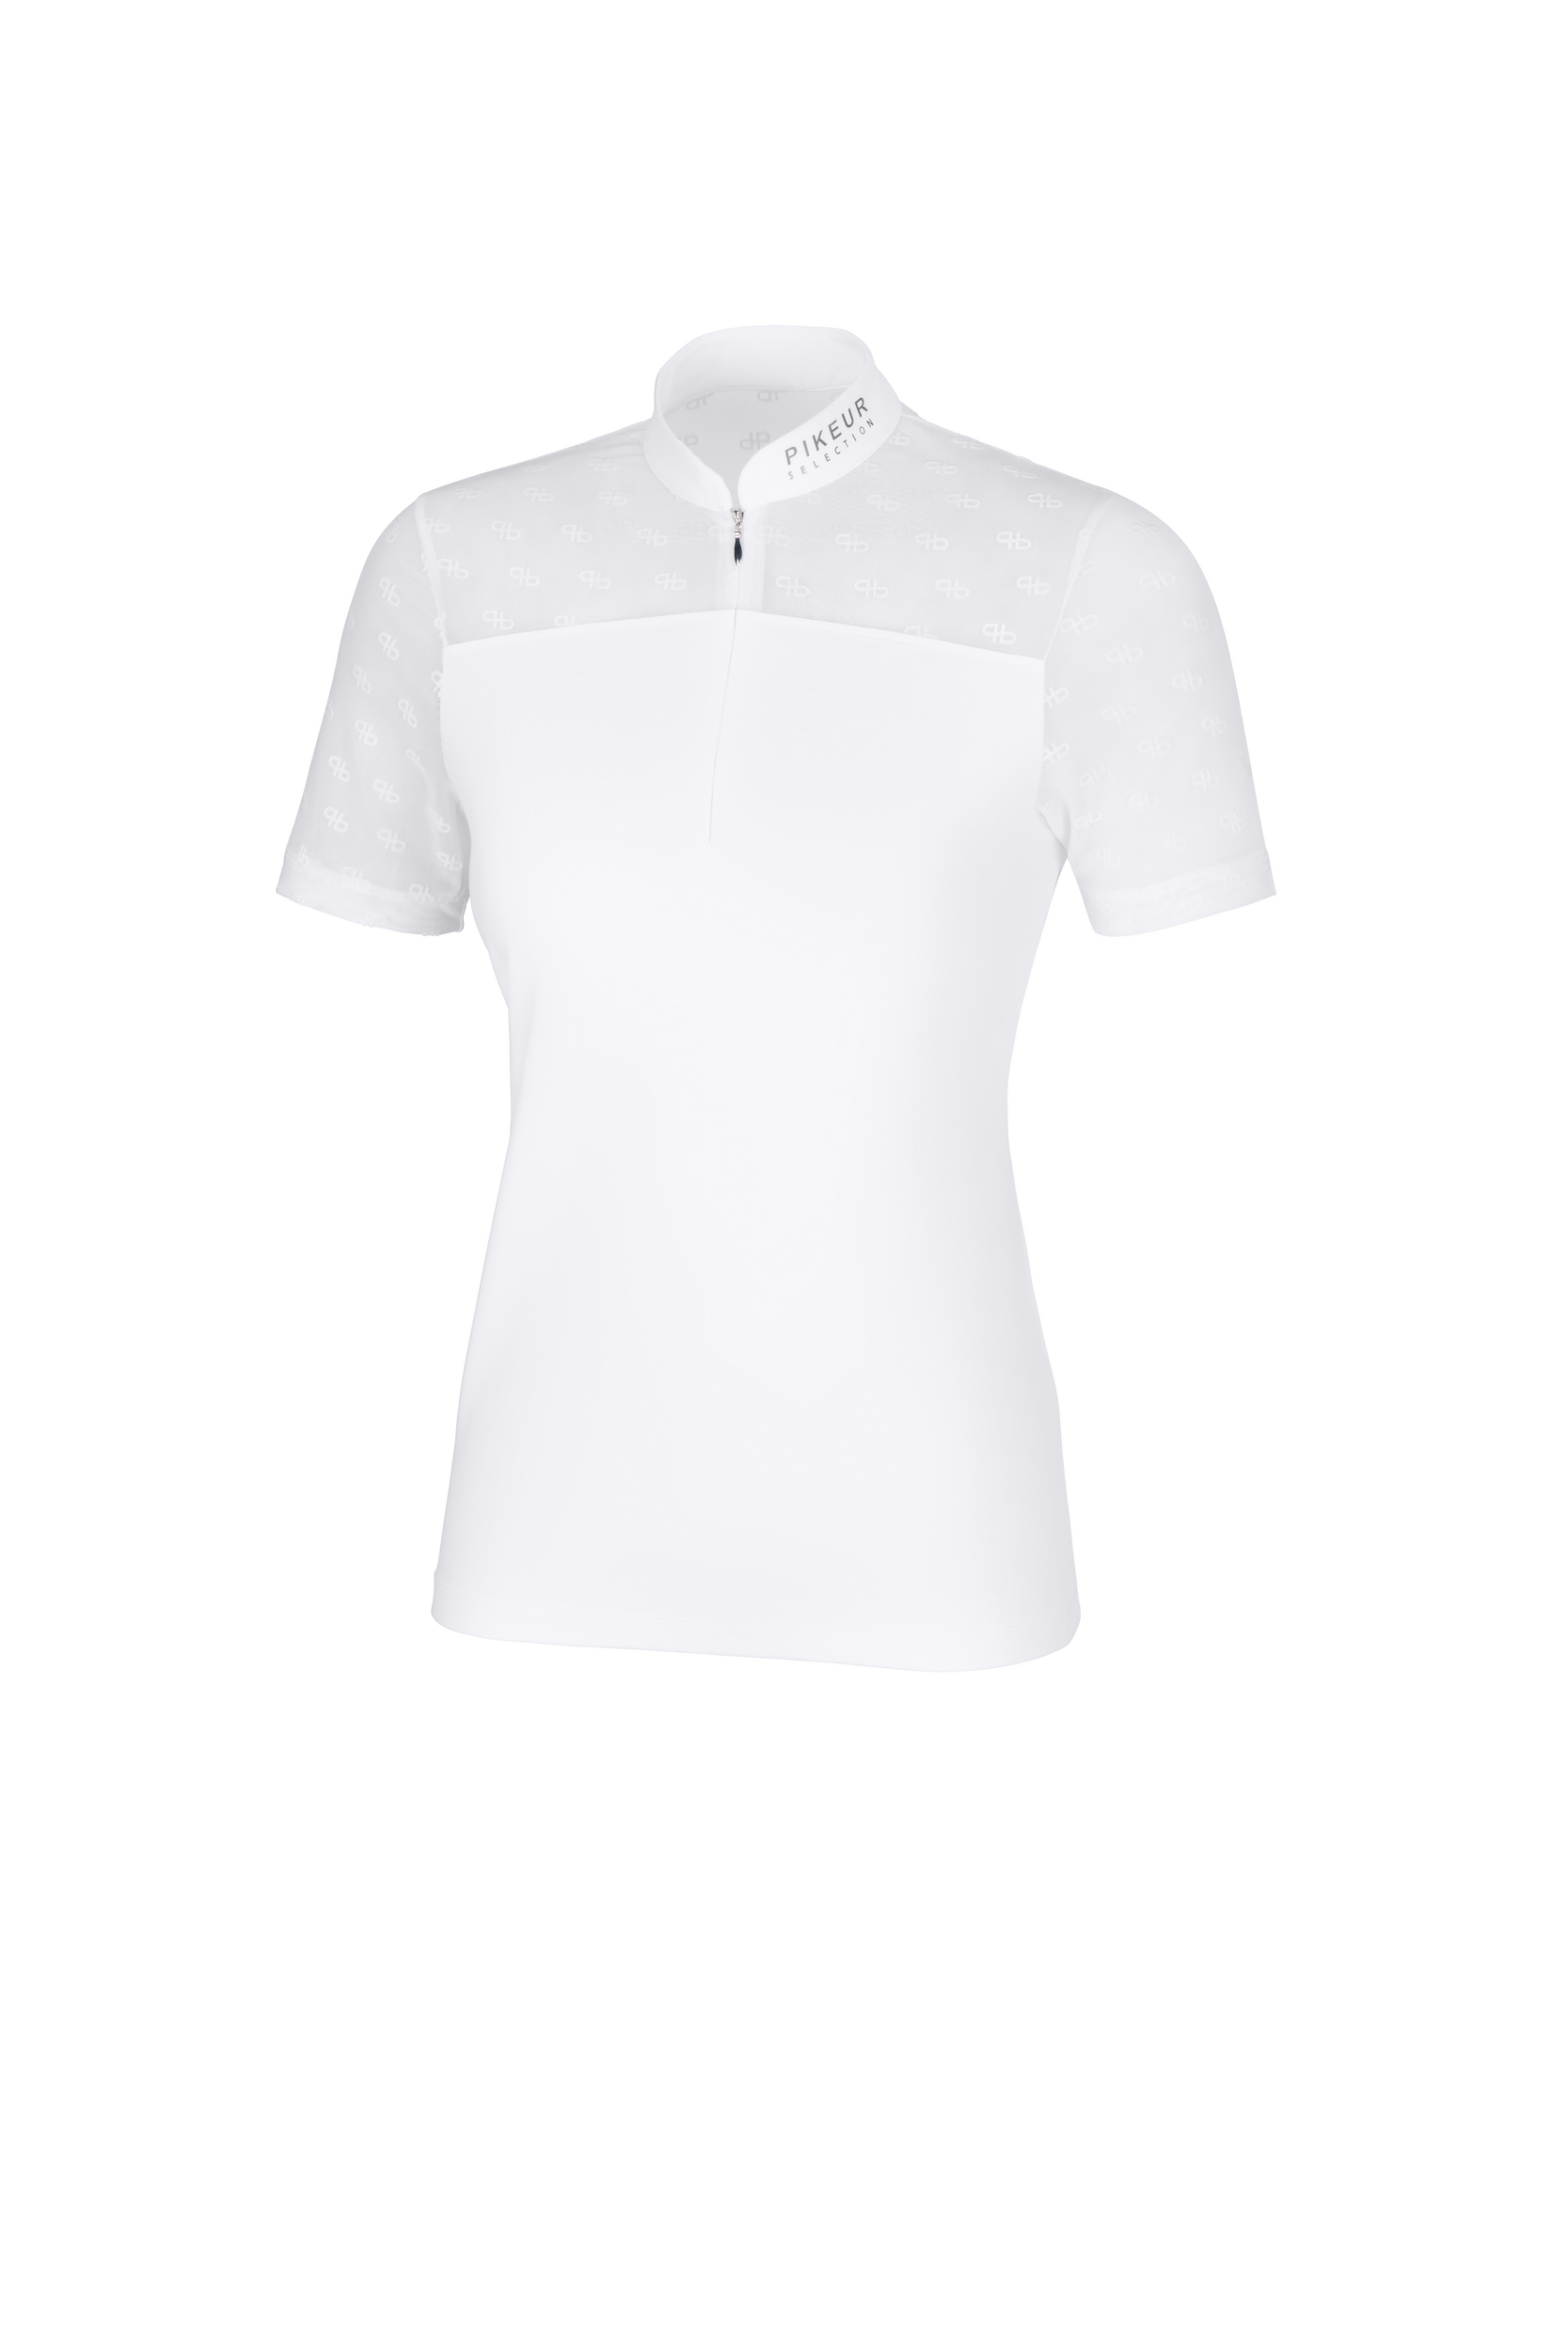 PIKEUR Damen Trainings Zip Shirt Kurzarm Selection FS24 - white - 36 - 2